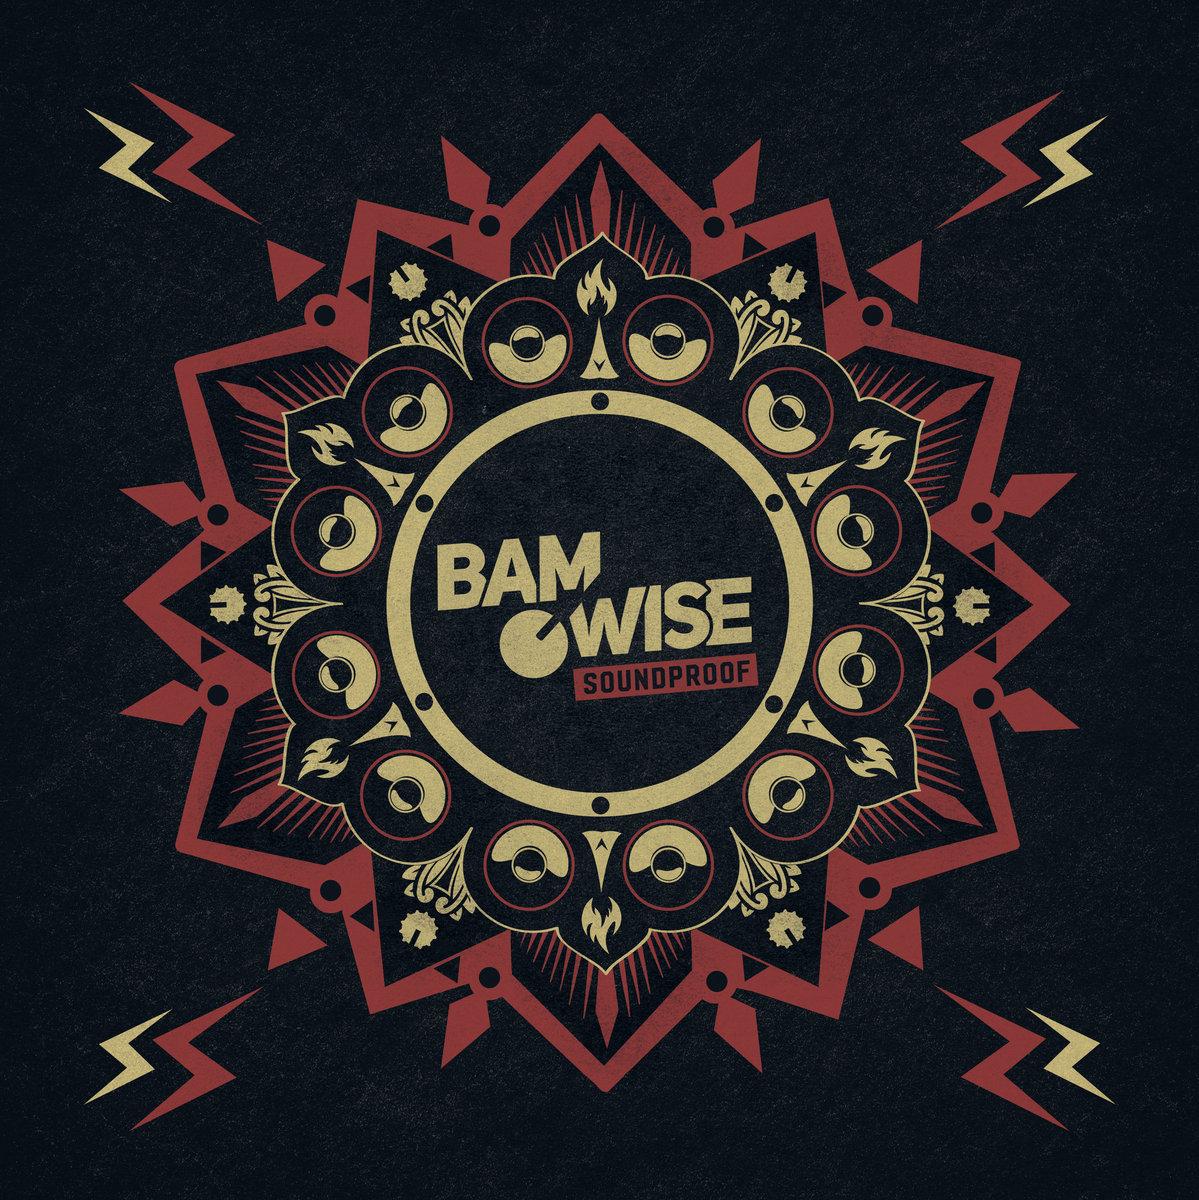 BAMWISE - Soundproof